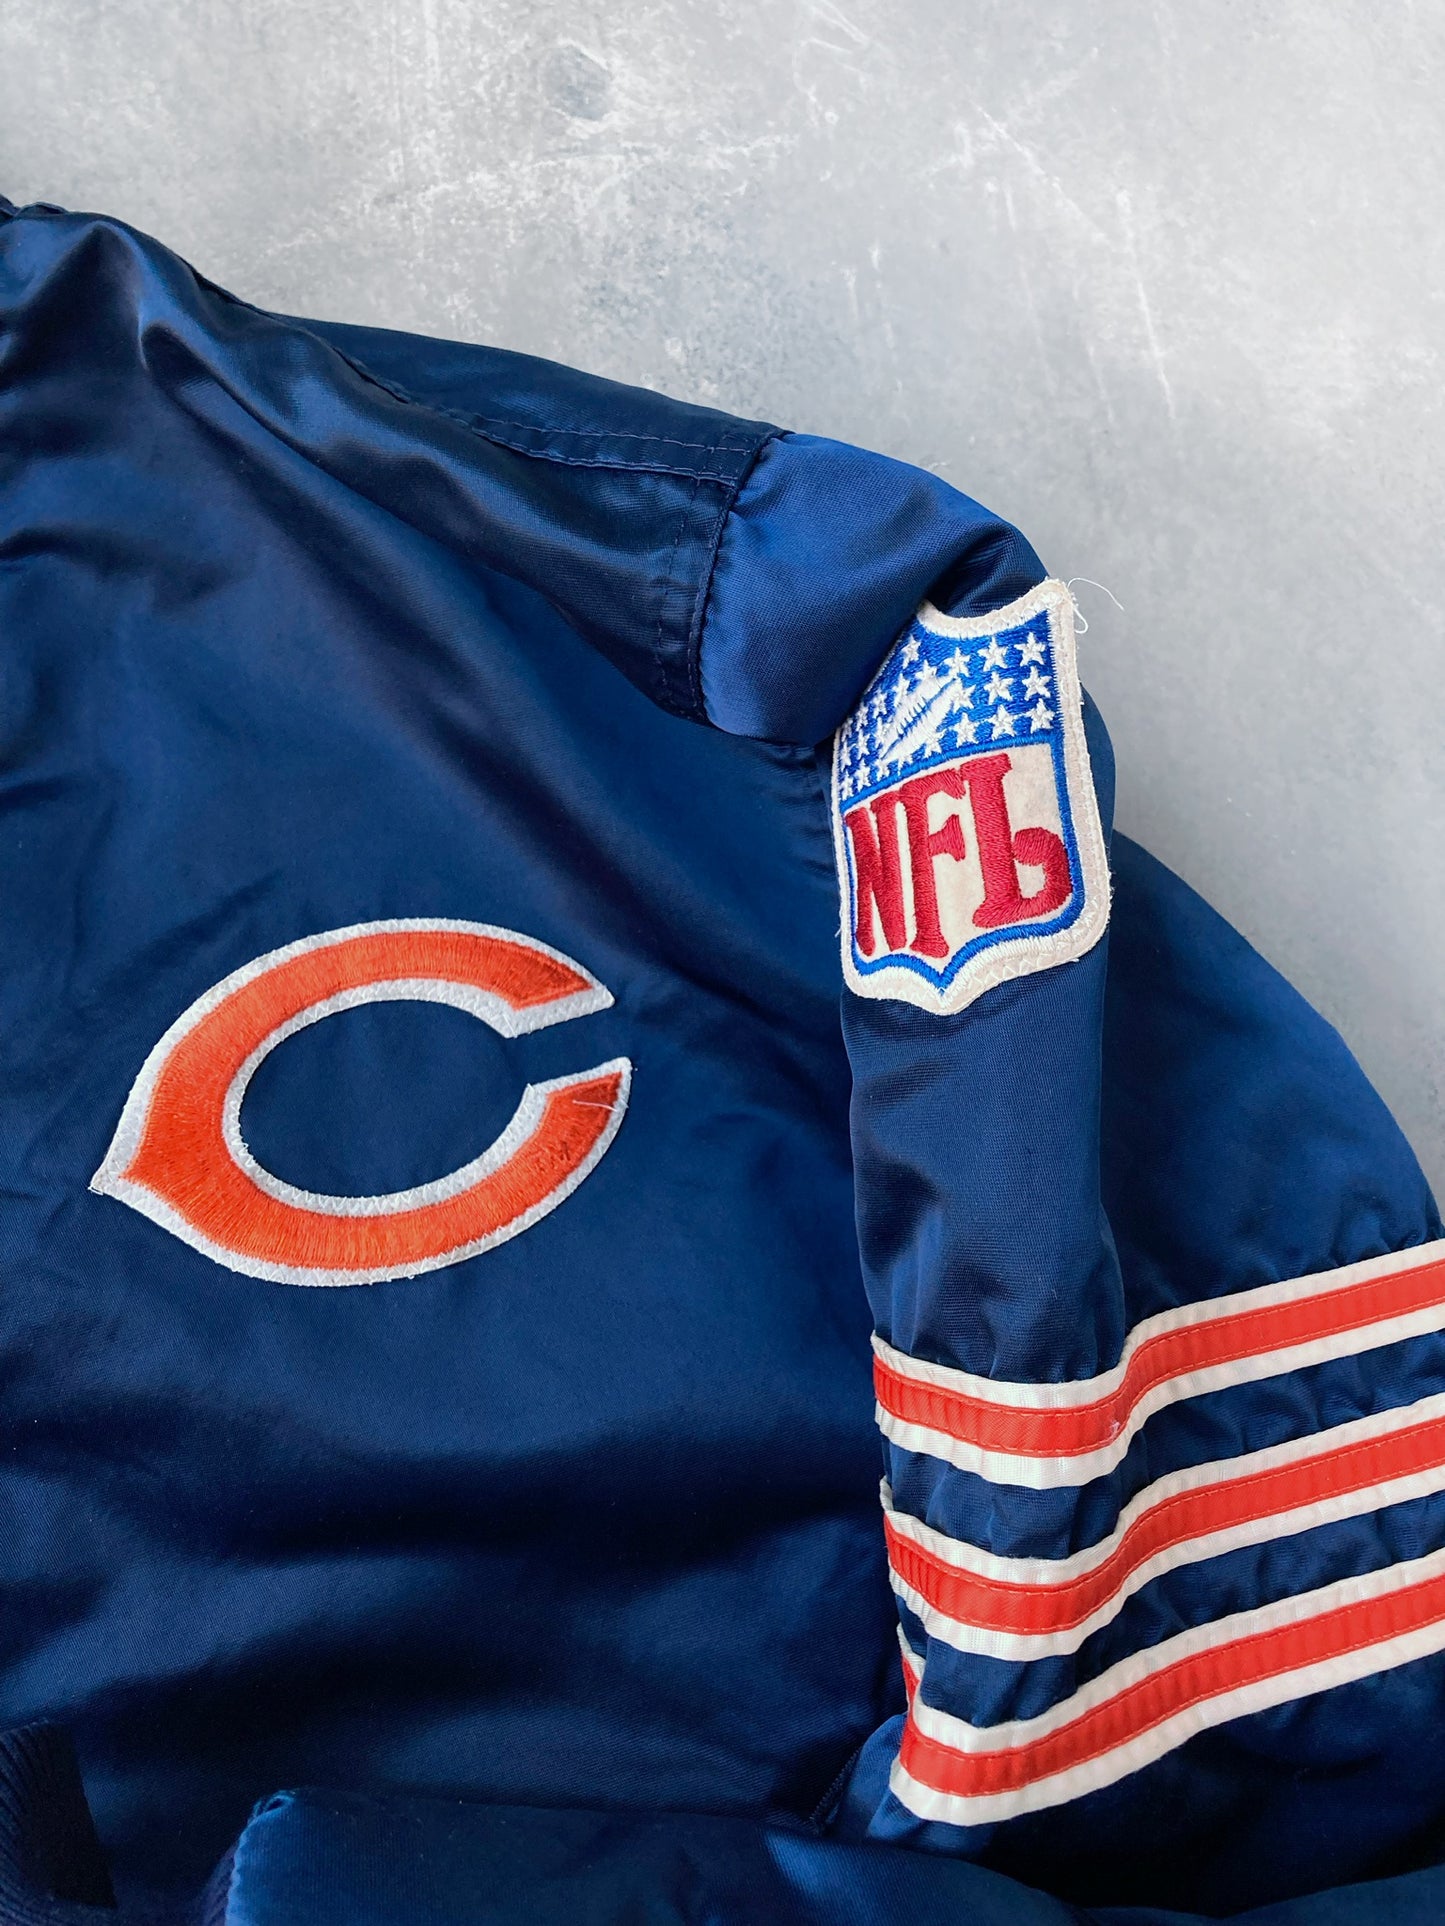 Chicago Bears Starter Jacket 90's - Large